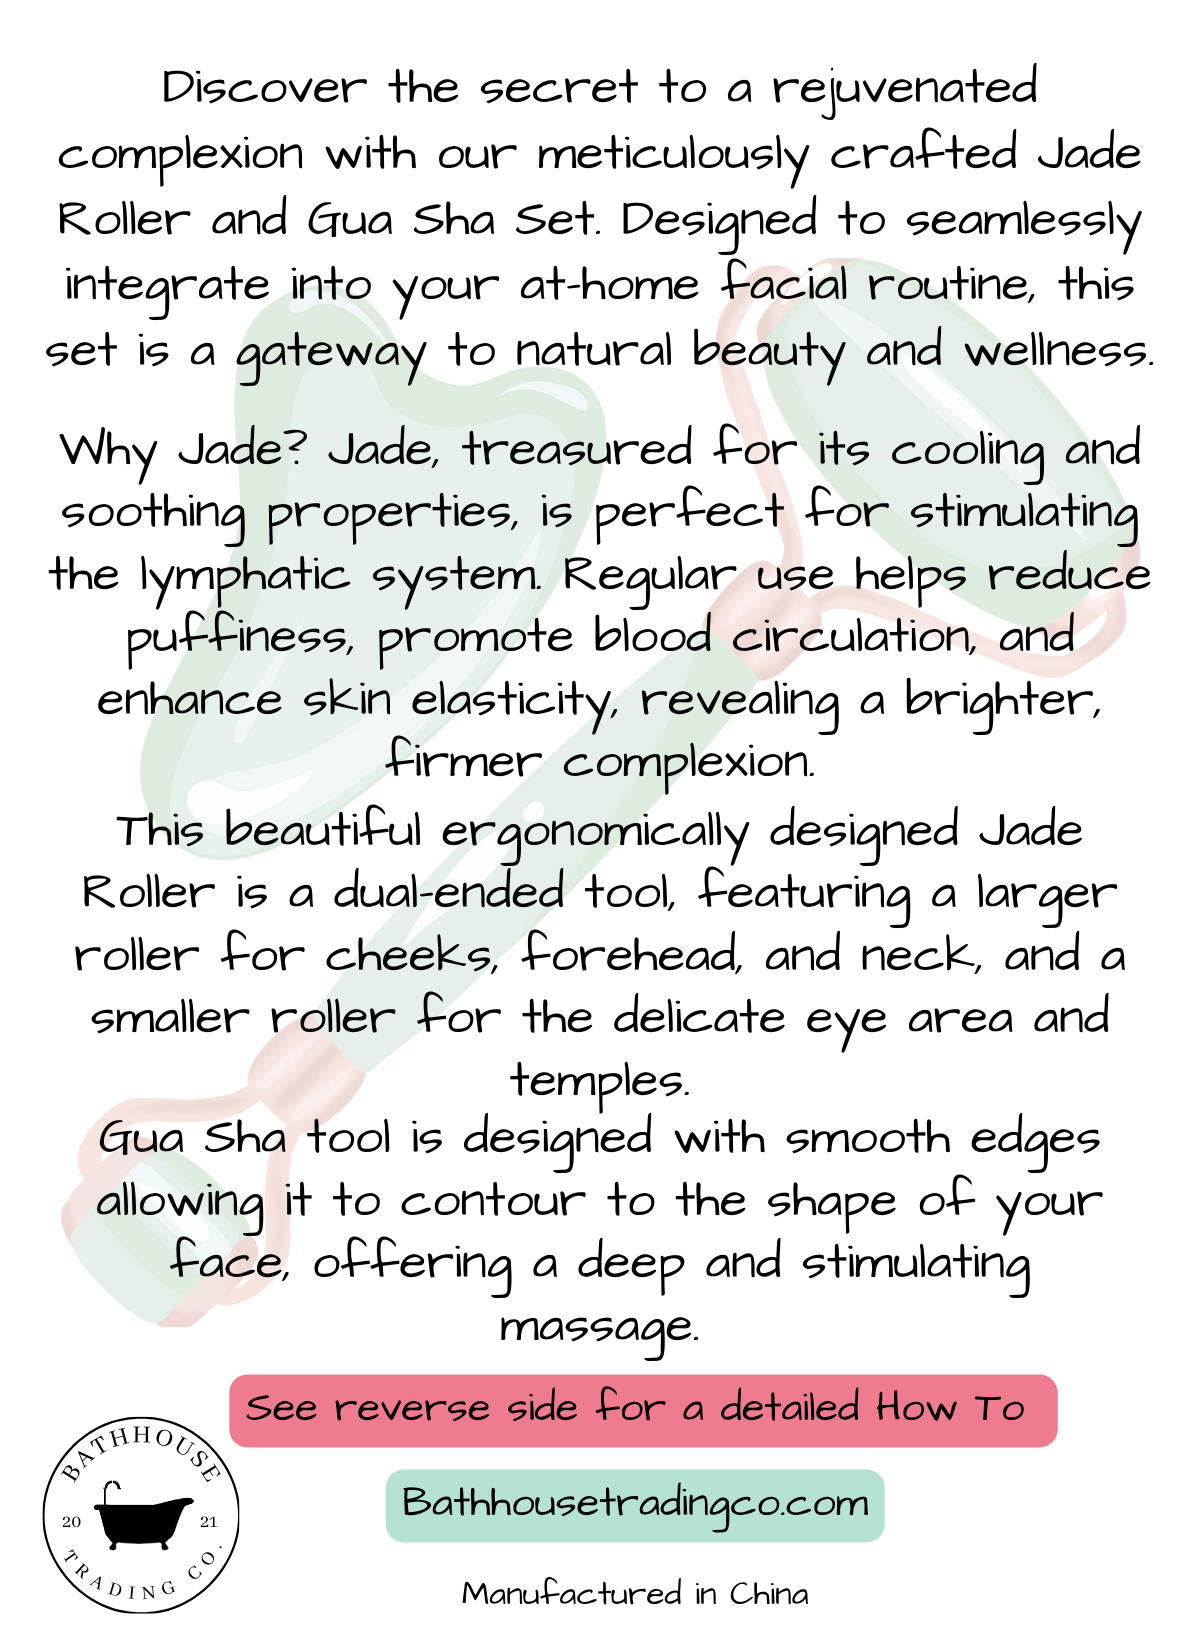 Jade Roller & Gua Sha Set - Bathhouse Trading Company